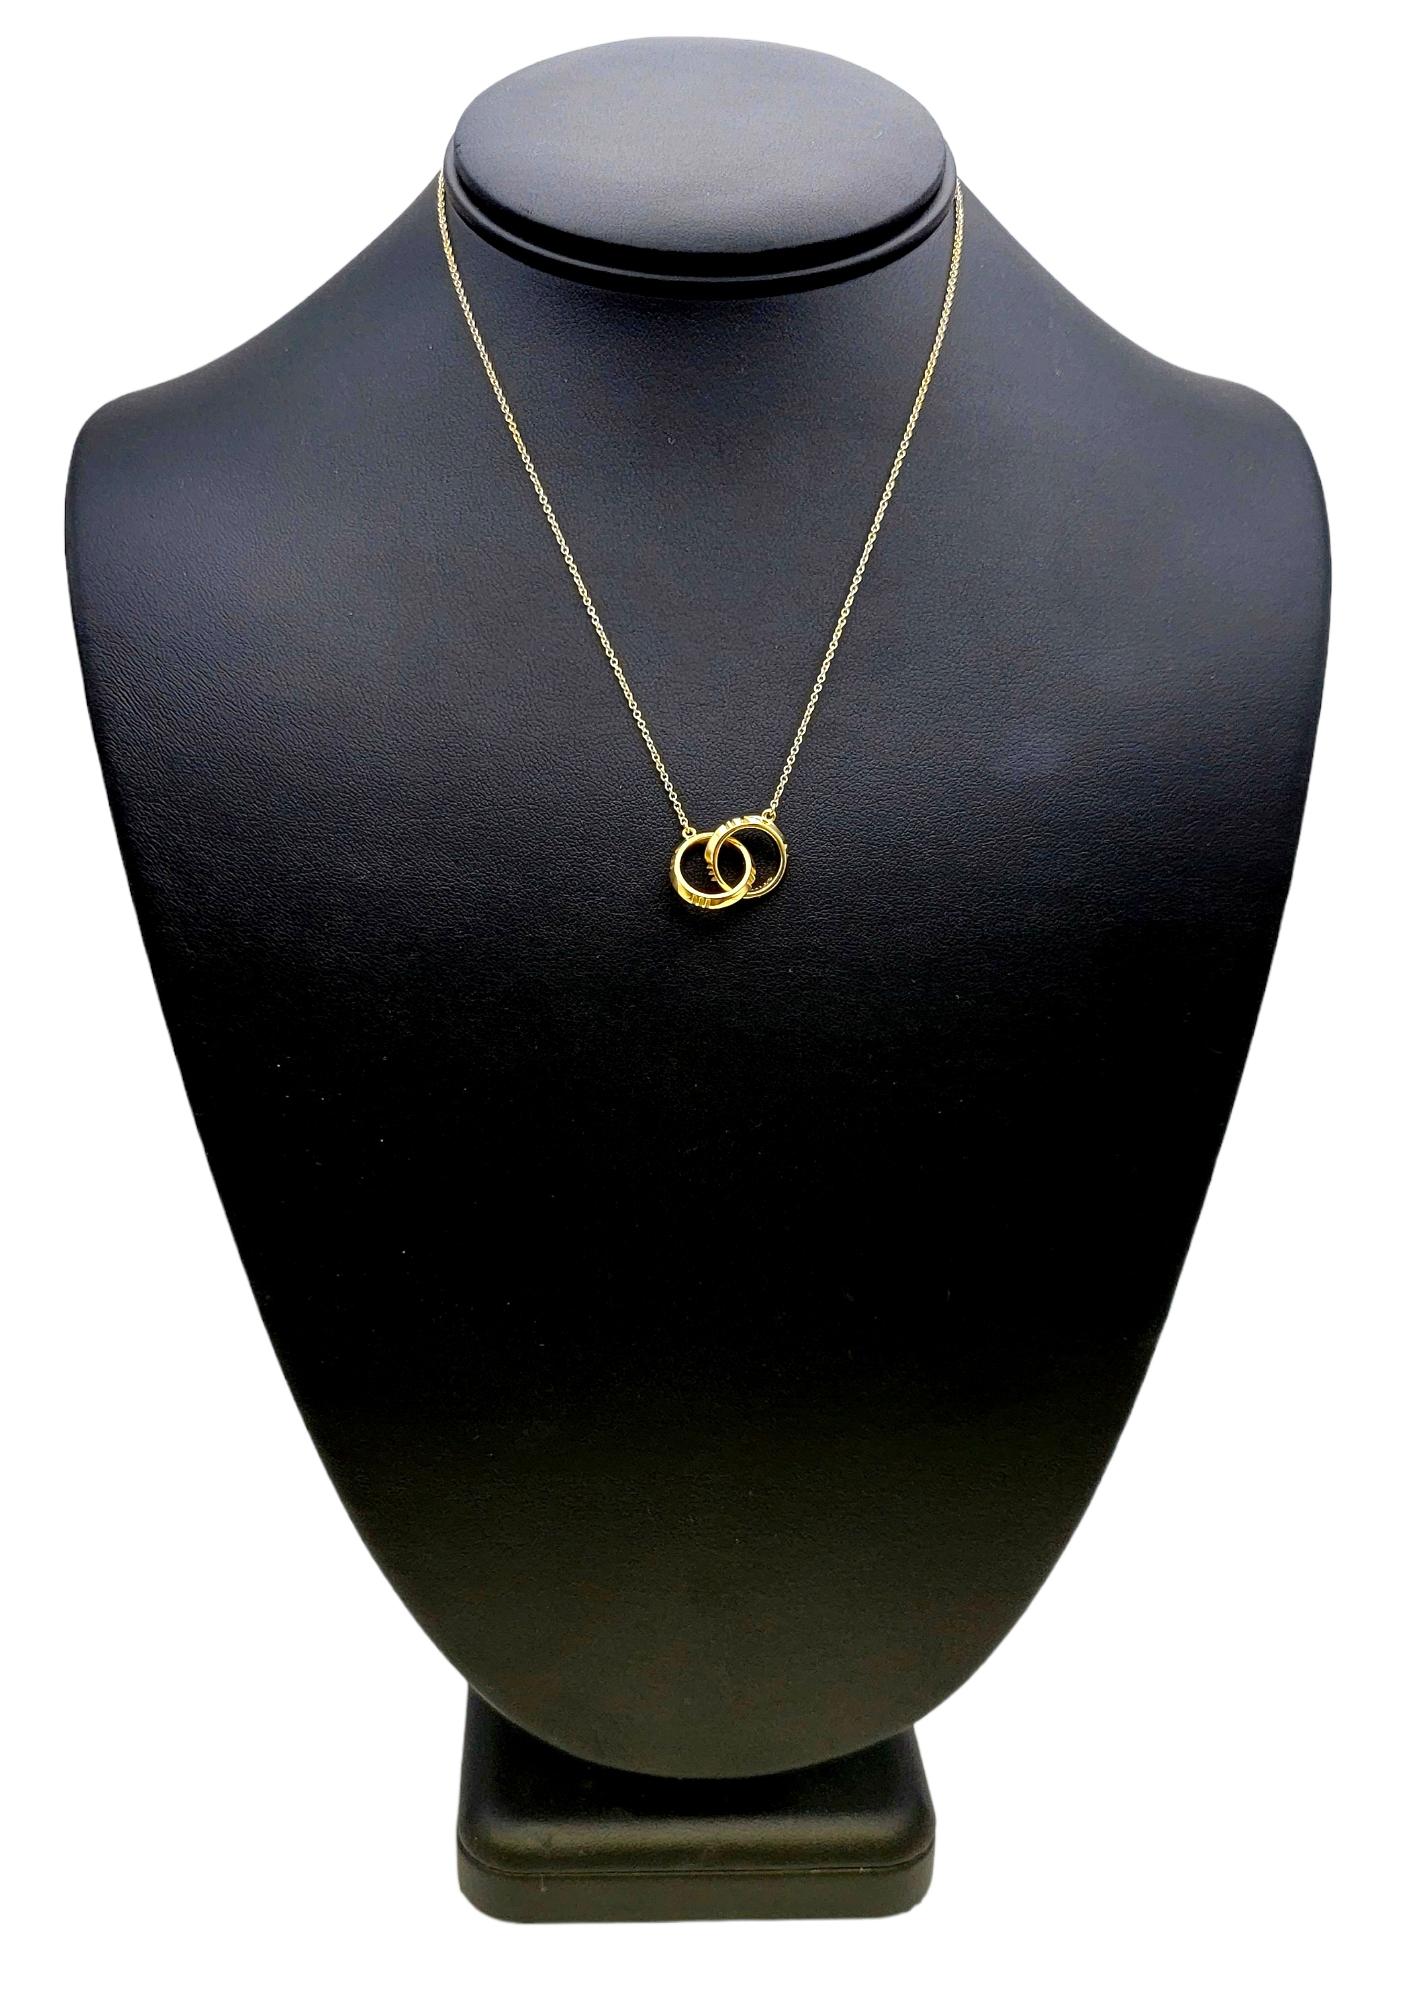 Tiffany & Co. Atlas, collier pendentif en or jaune 18 carats avec pendentif imbriqué en forme de X 10